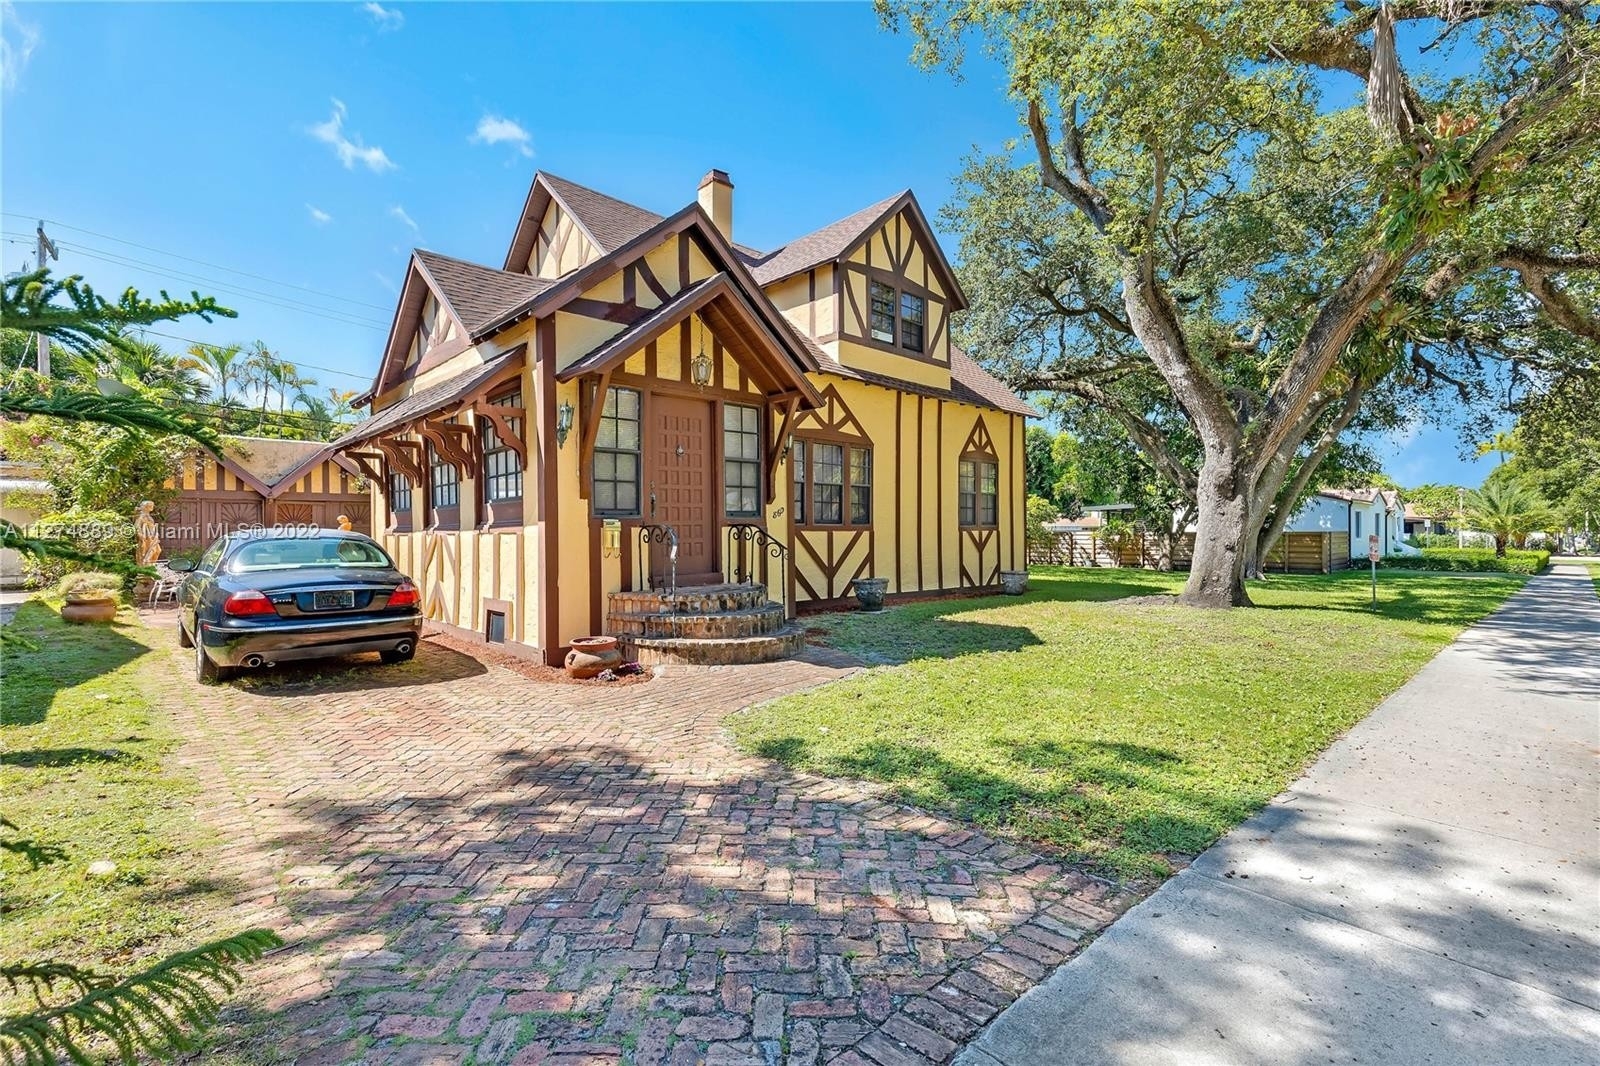 Single Family Home for Sale at Shore Crest, Miami, FL 33138